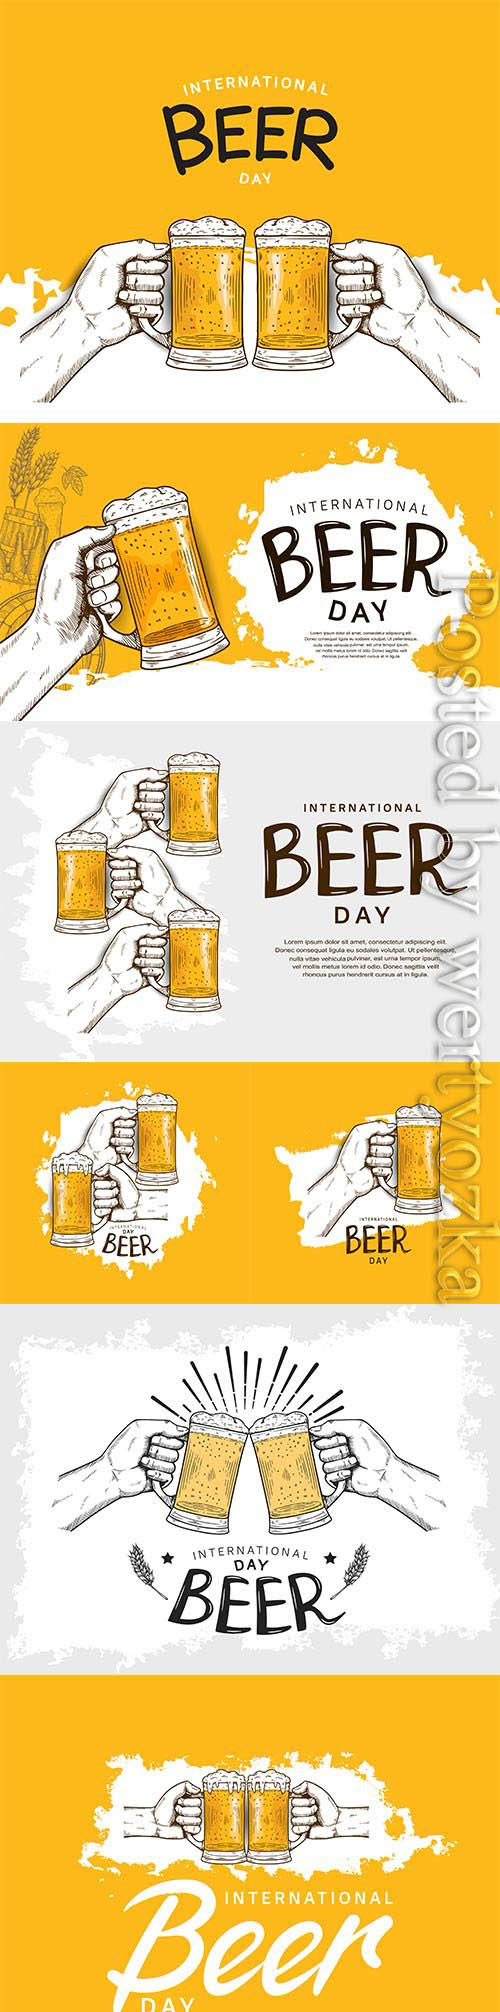 International beer day illustration vector design template